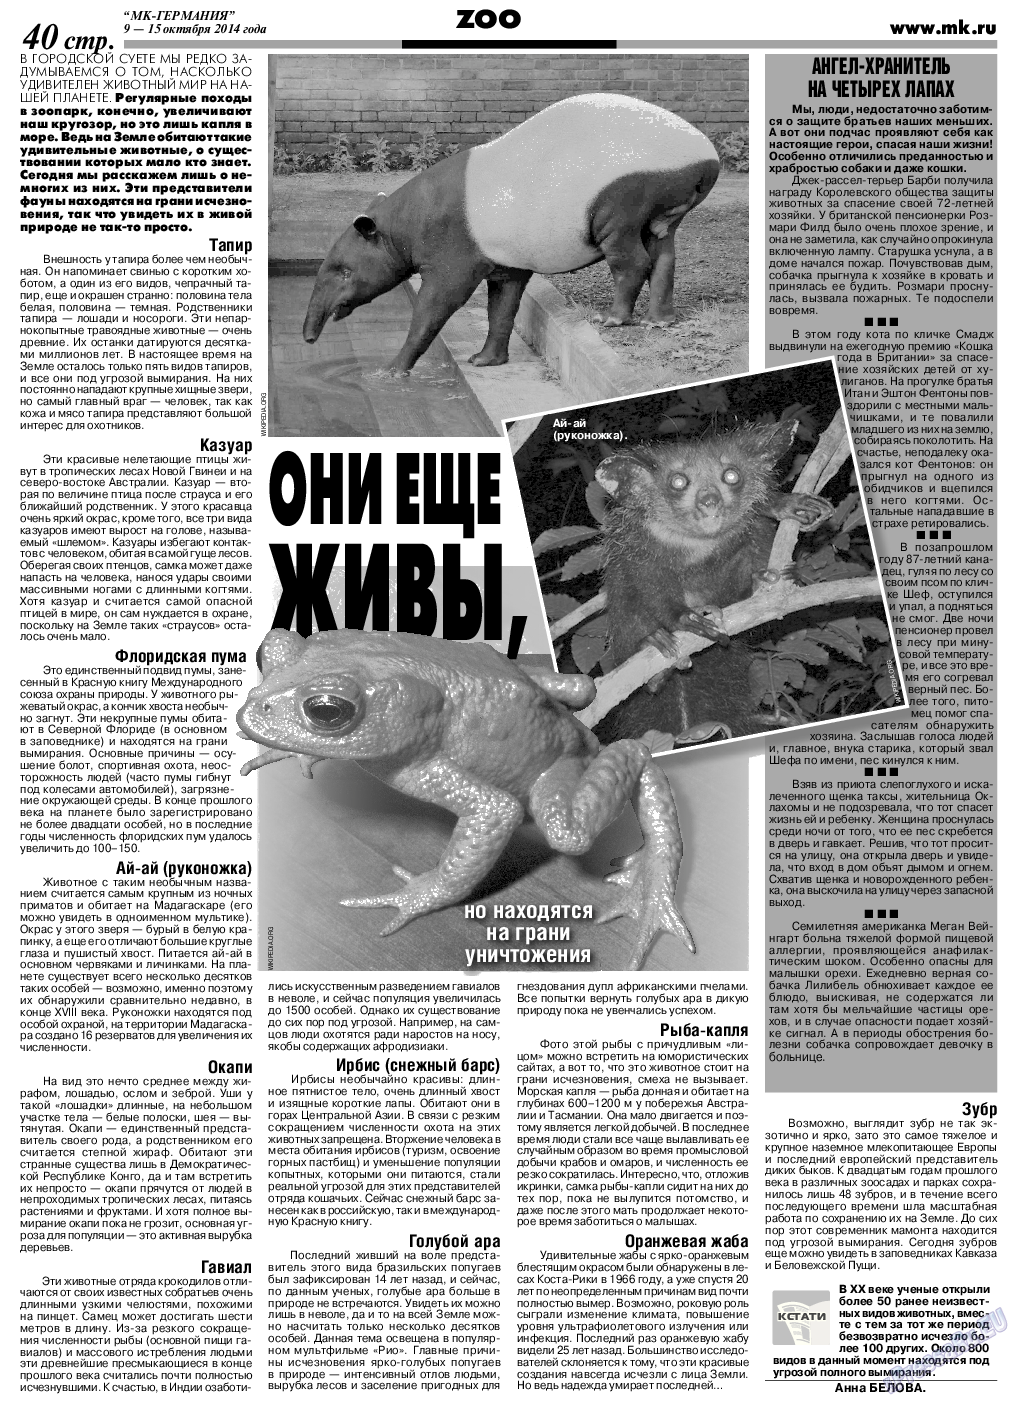 МК-Германия, газета. 2014 №41 стр.40